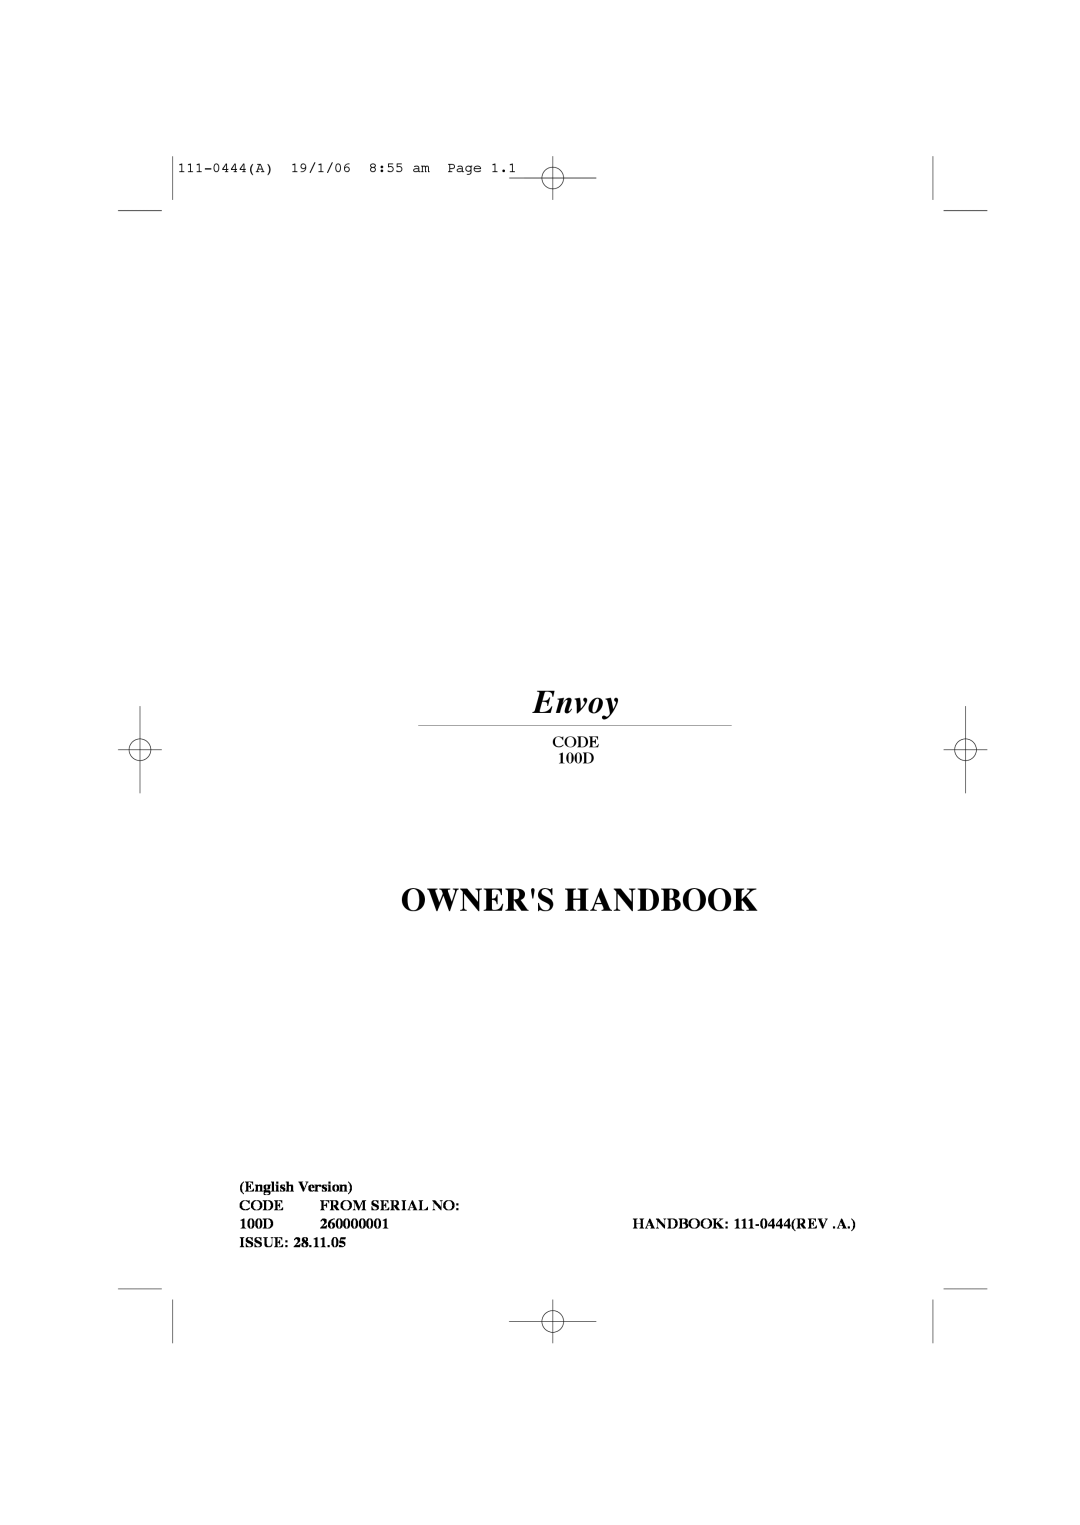 Hayter Mowers manual CODE 100D, 111-0444A 19/1/06 855 am Page, Envoy, Owners Handbook, HANDBOOK 111-0444REV .A 